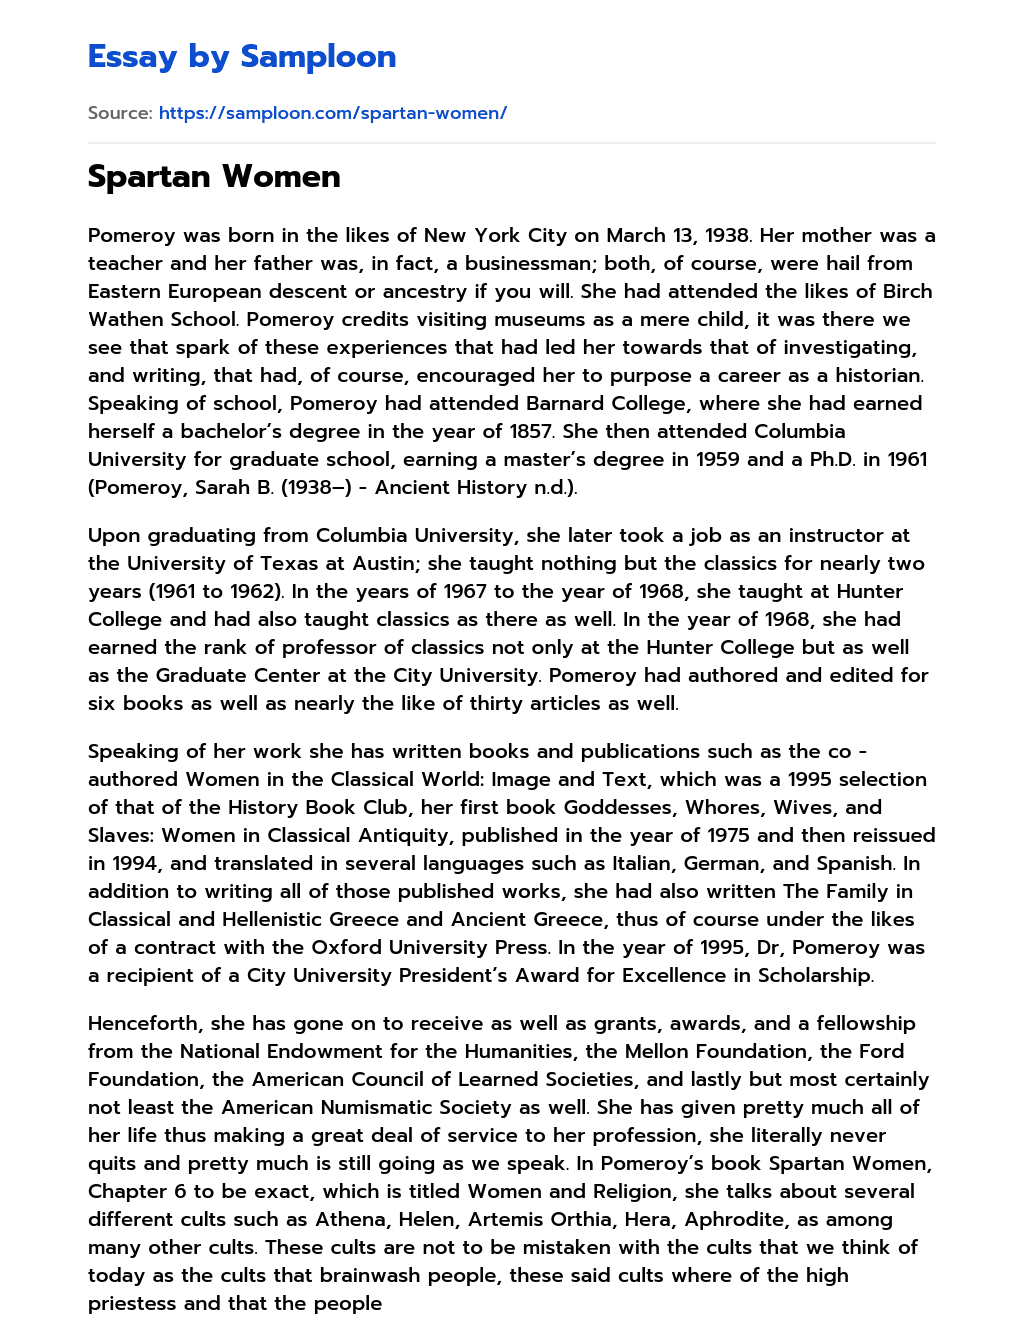 Spartan Women essay